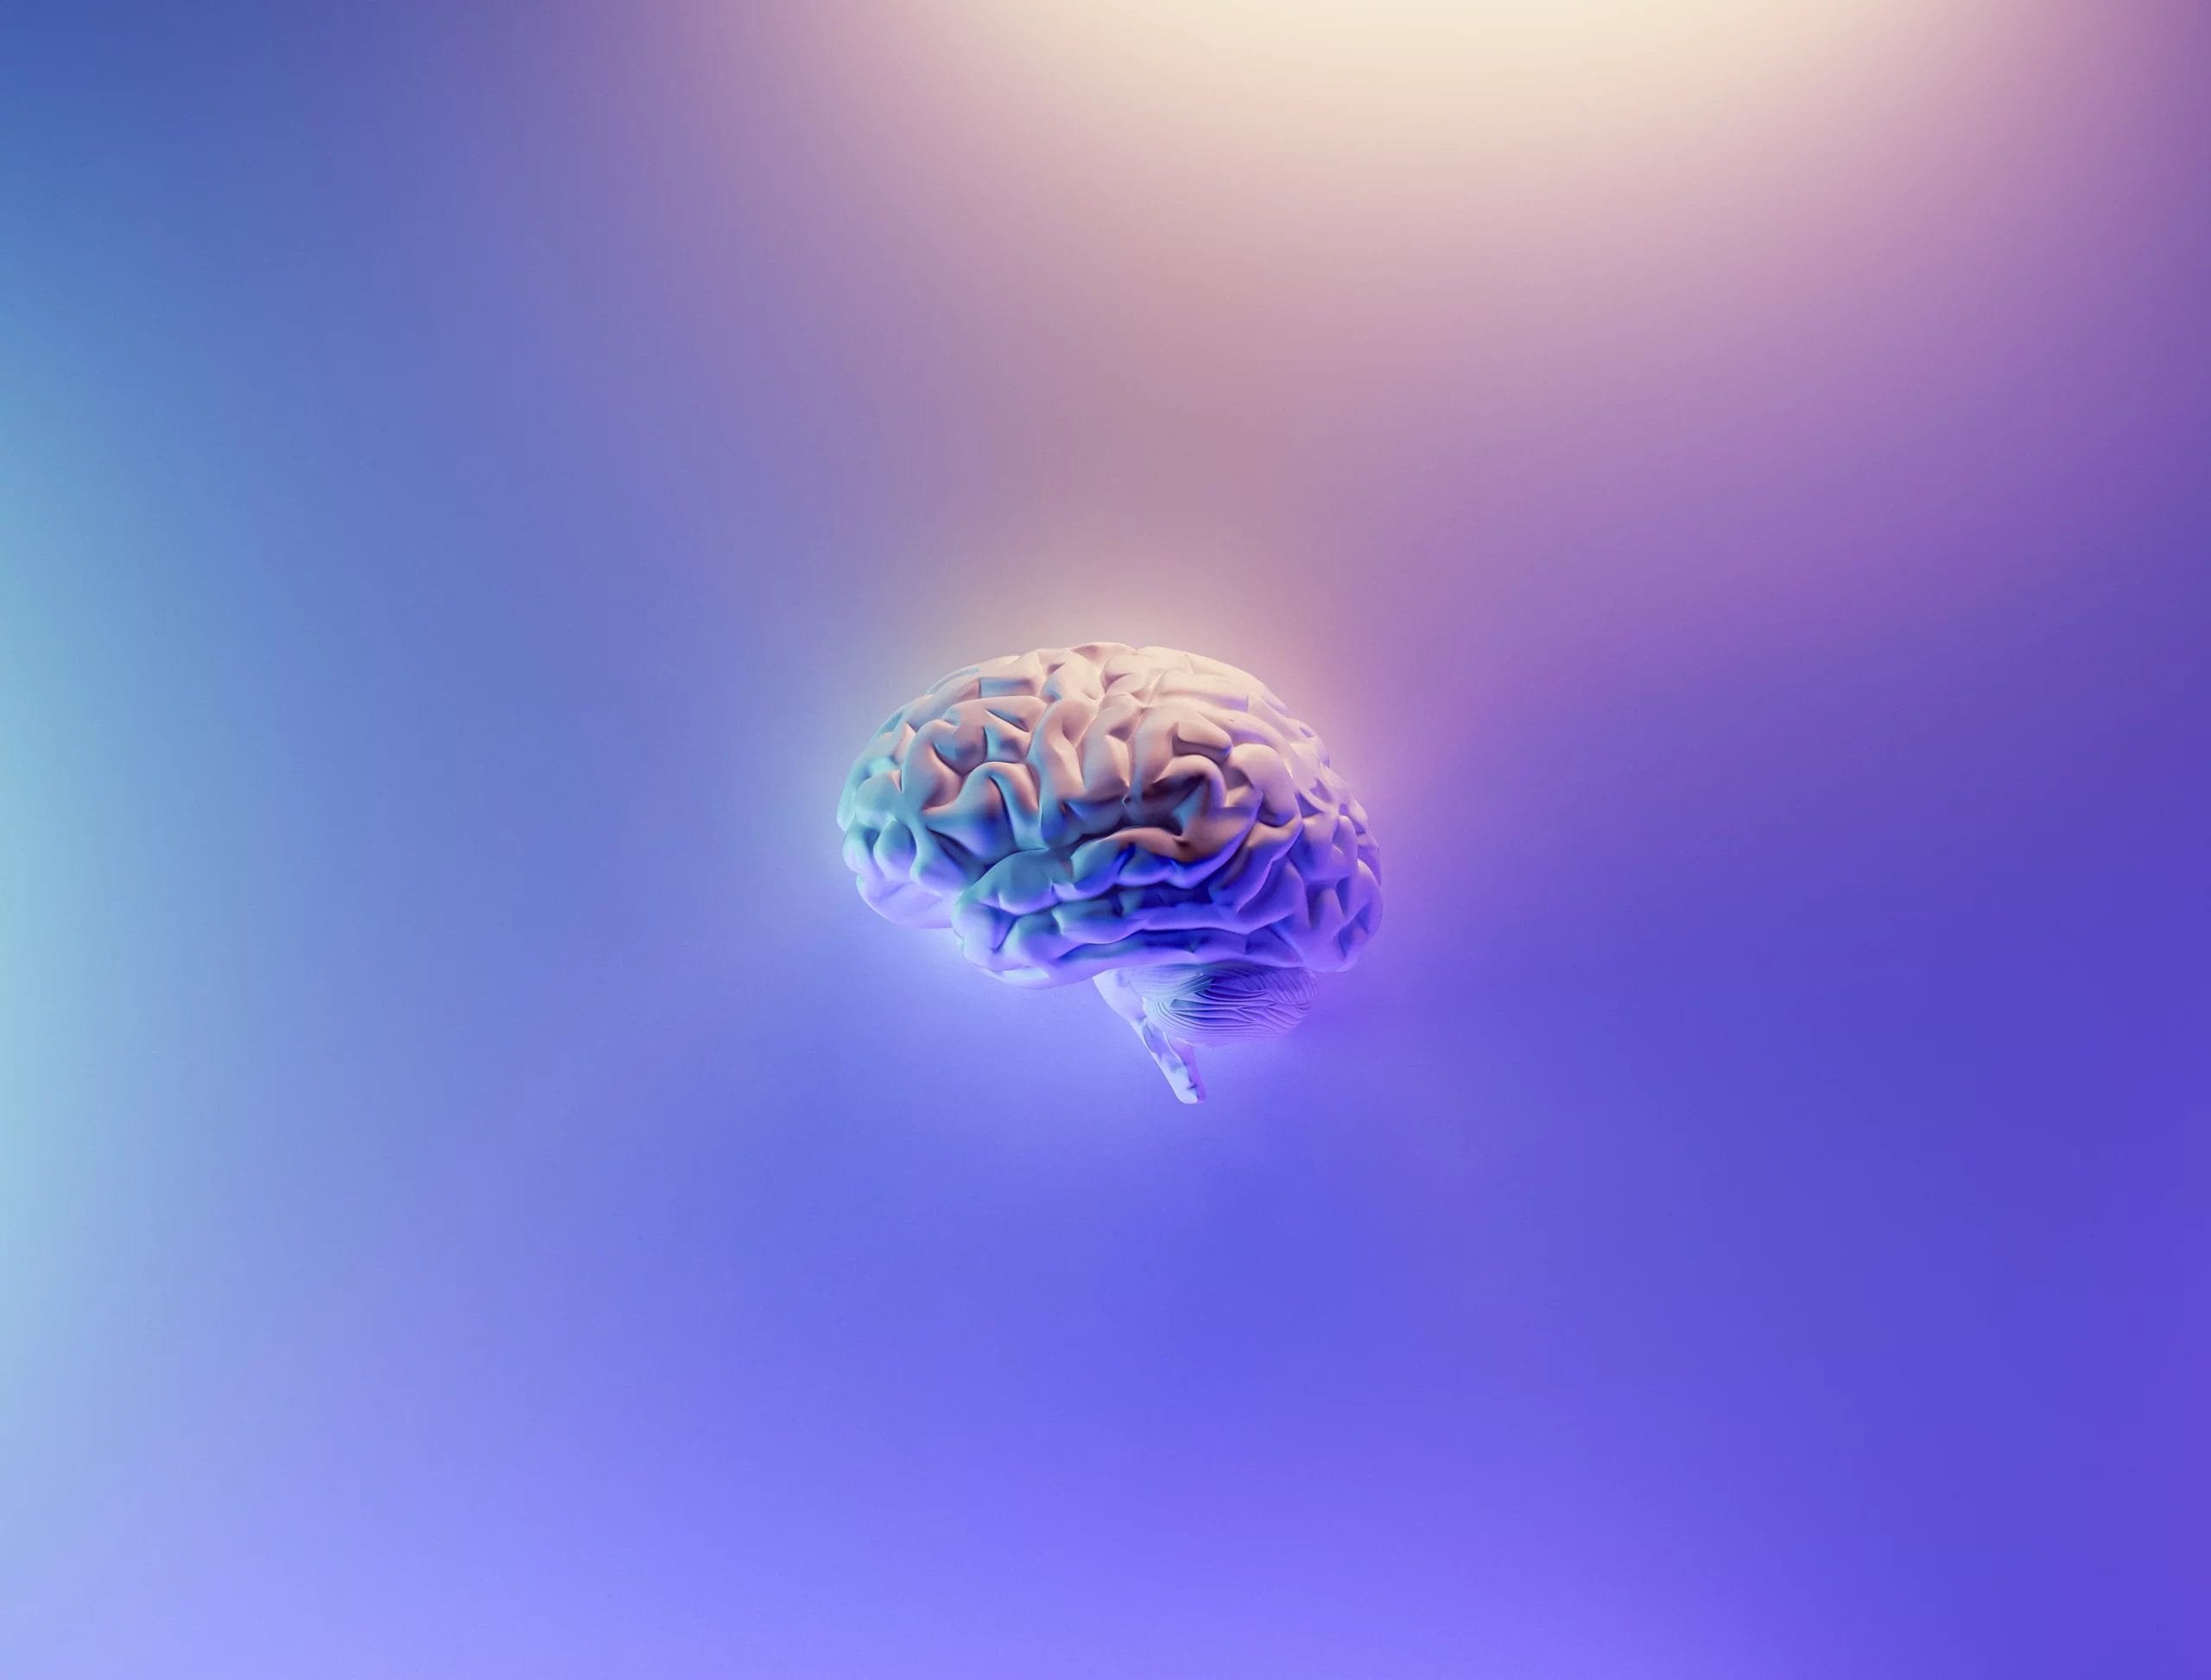 Bionaut Labs wins humanitarian use device designation to treat rare pediatric brain disorder